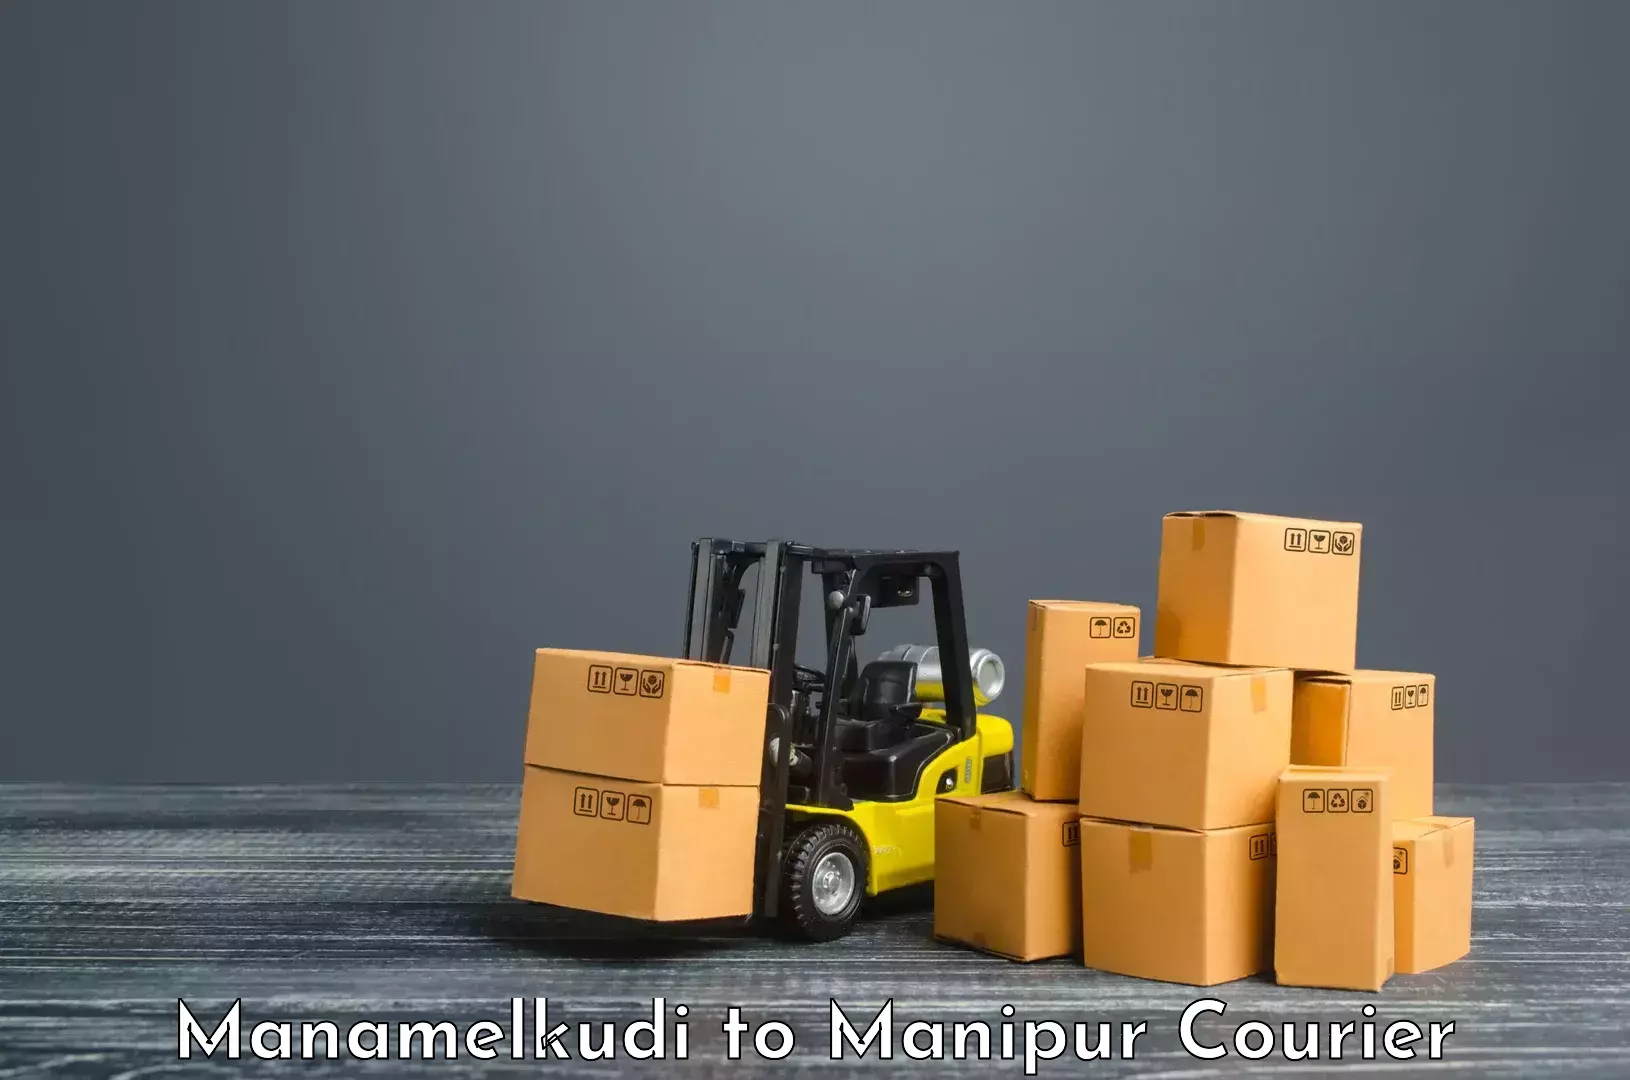 Professional courier services Manamelkudi to Churachandpur